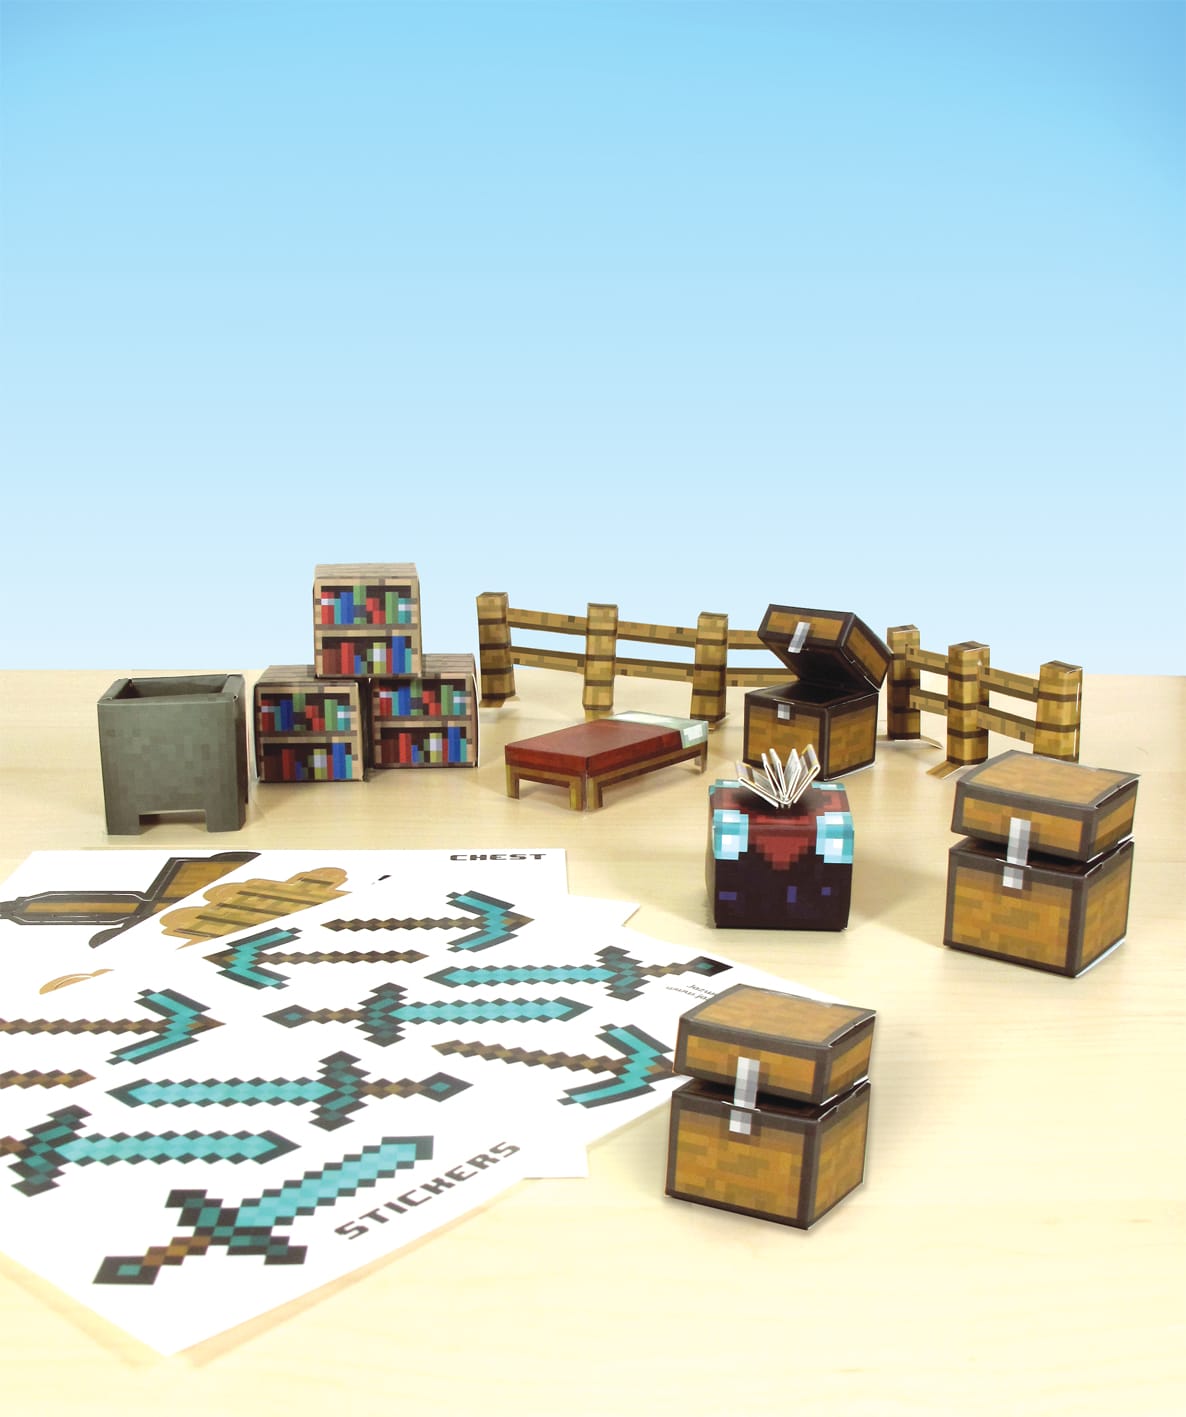 minecraft chest papercraft